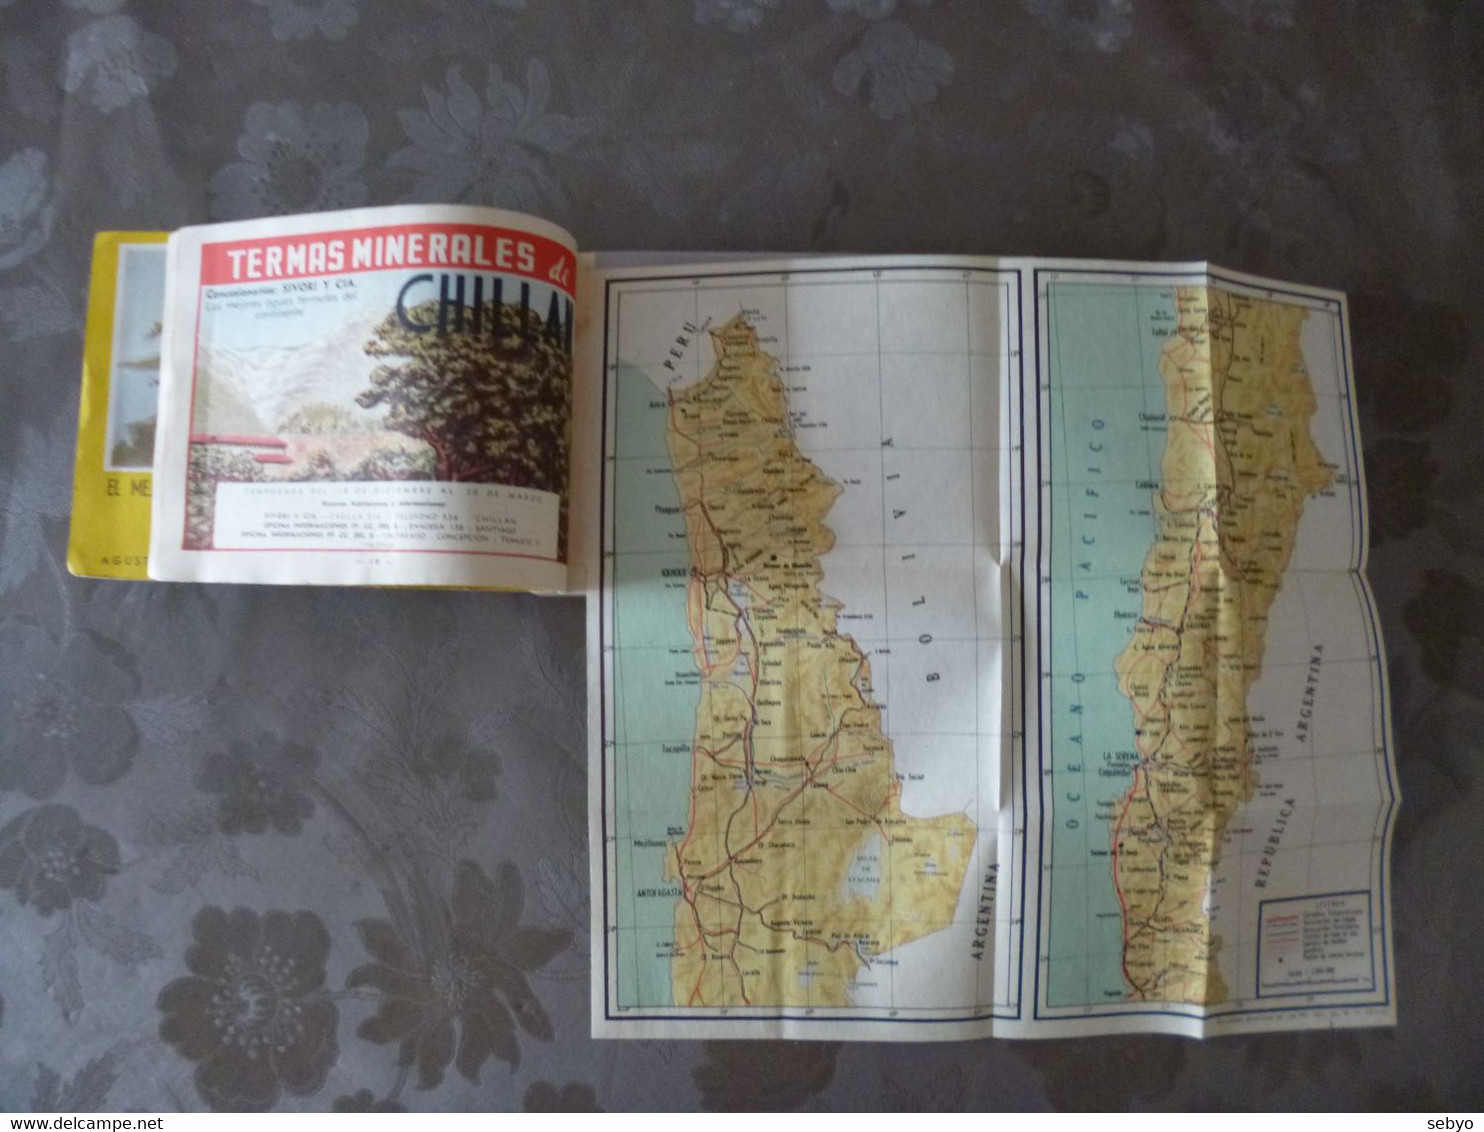 CHILI: Guide 1955. Guia Del Veraneante 1955. - Aardrijkskunde & Reizen